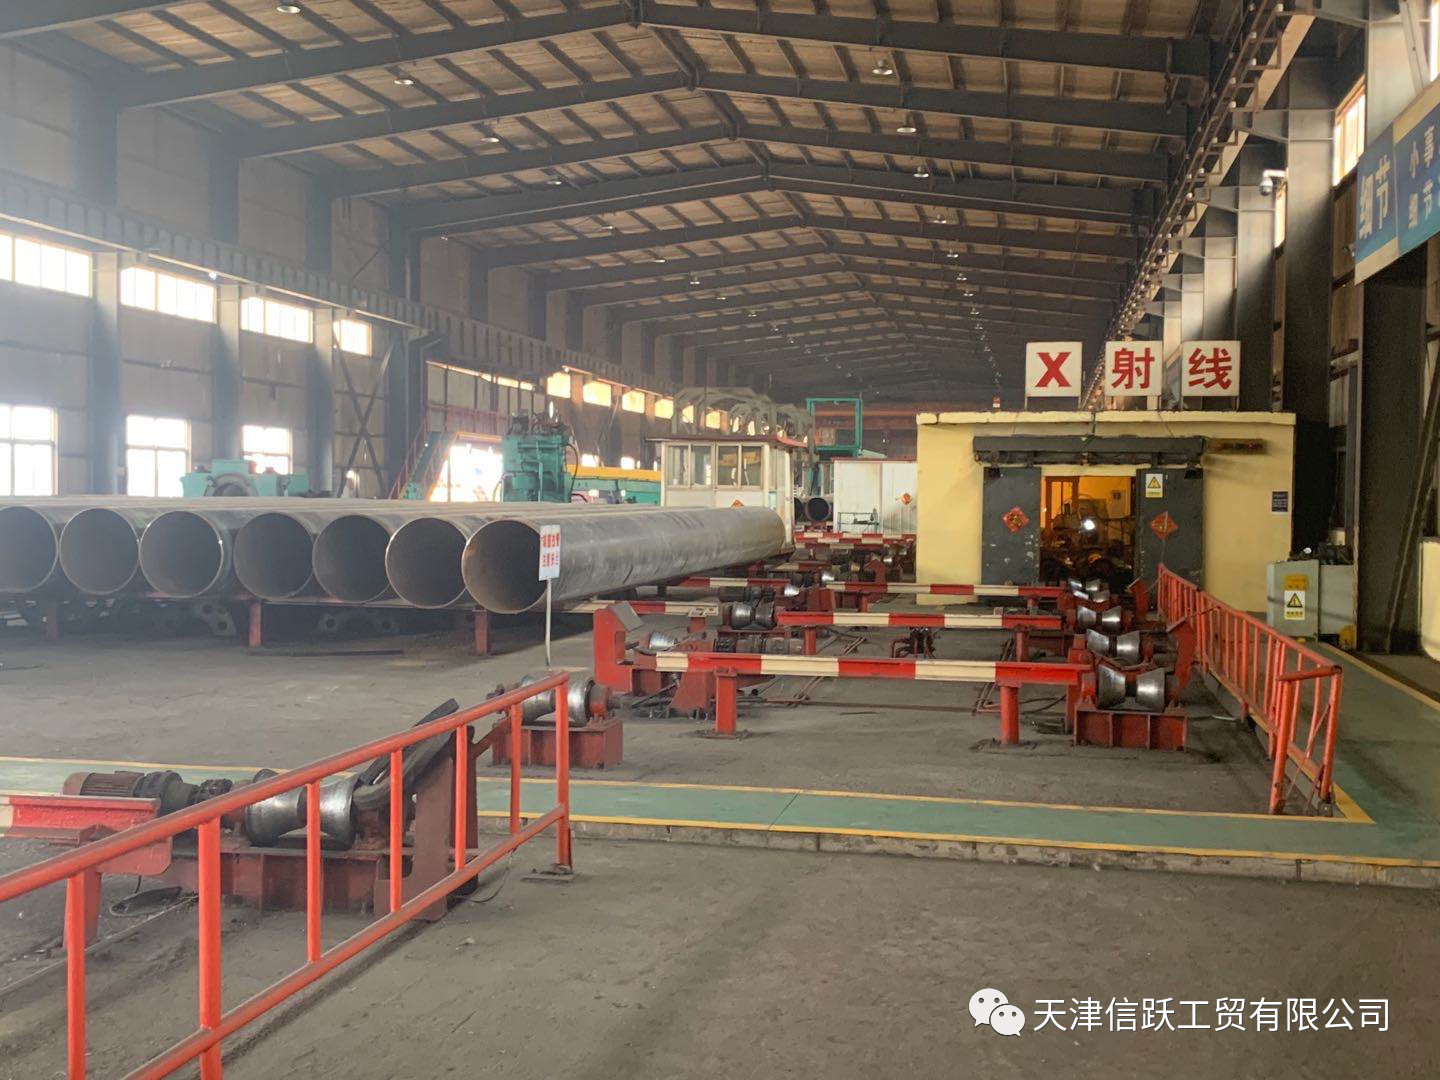 Tianjin Xinyue Steel Group Full Resumption Work